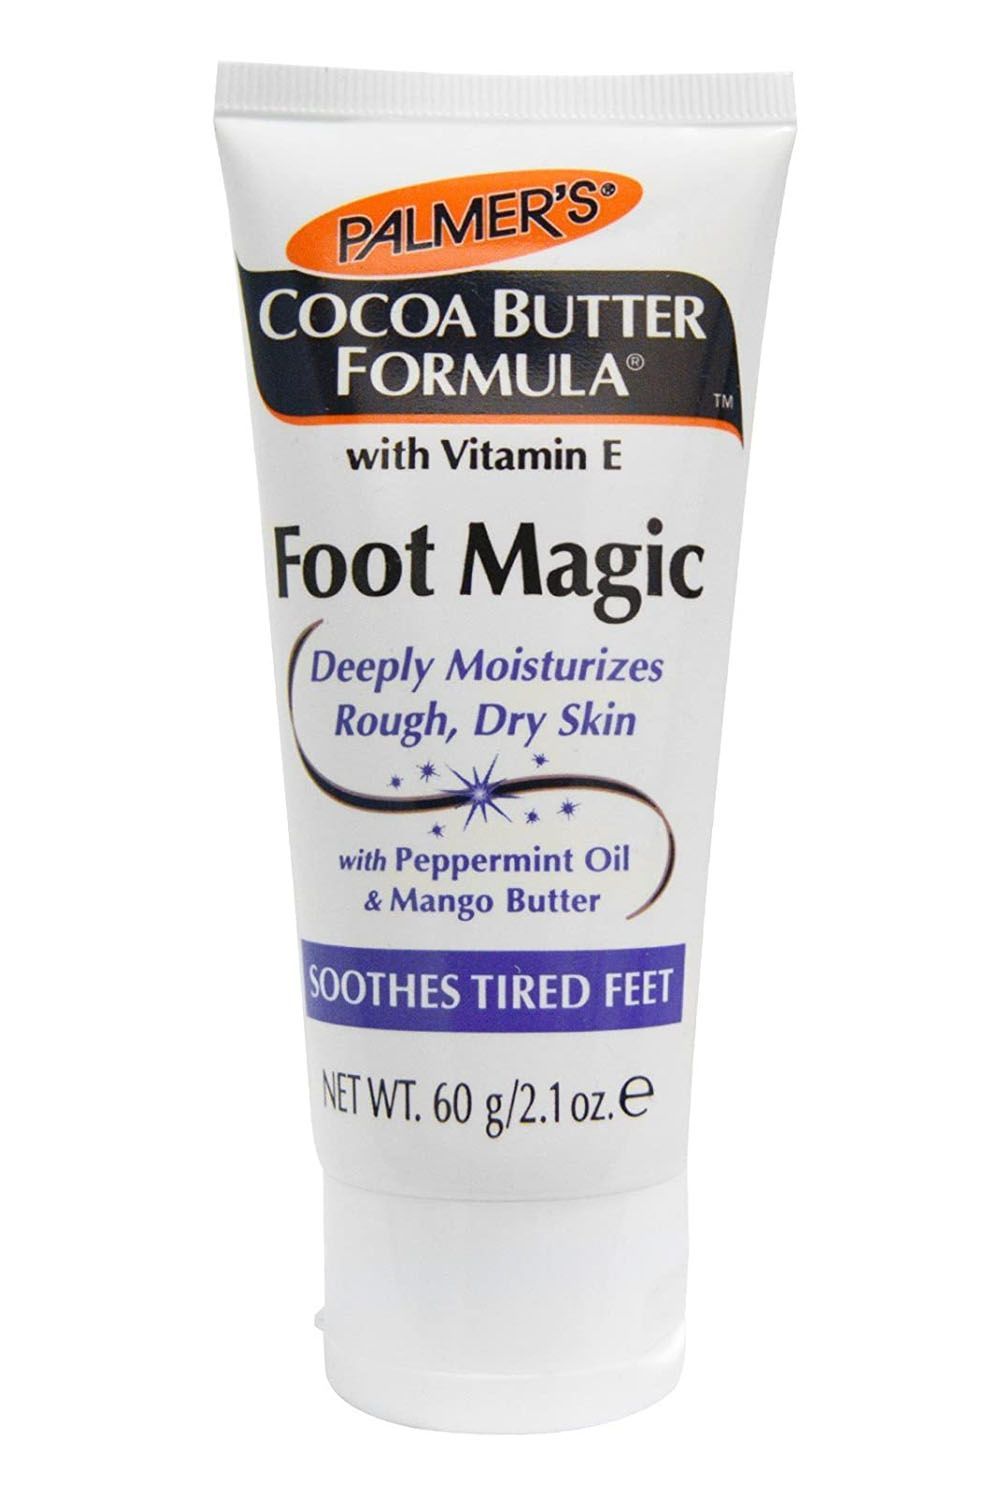 foot cream for dry skin